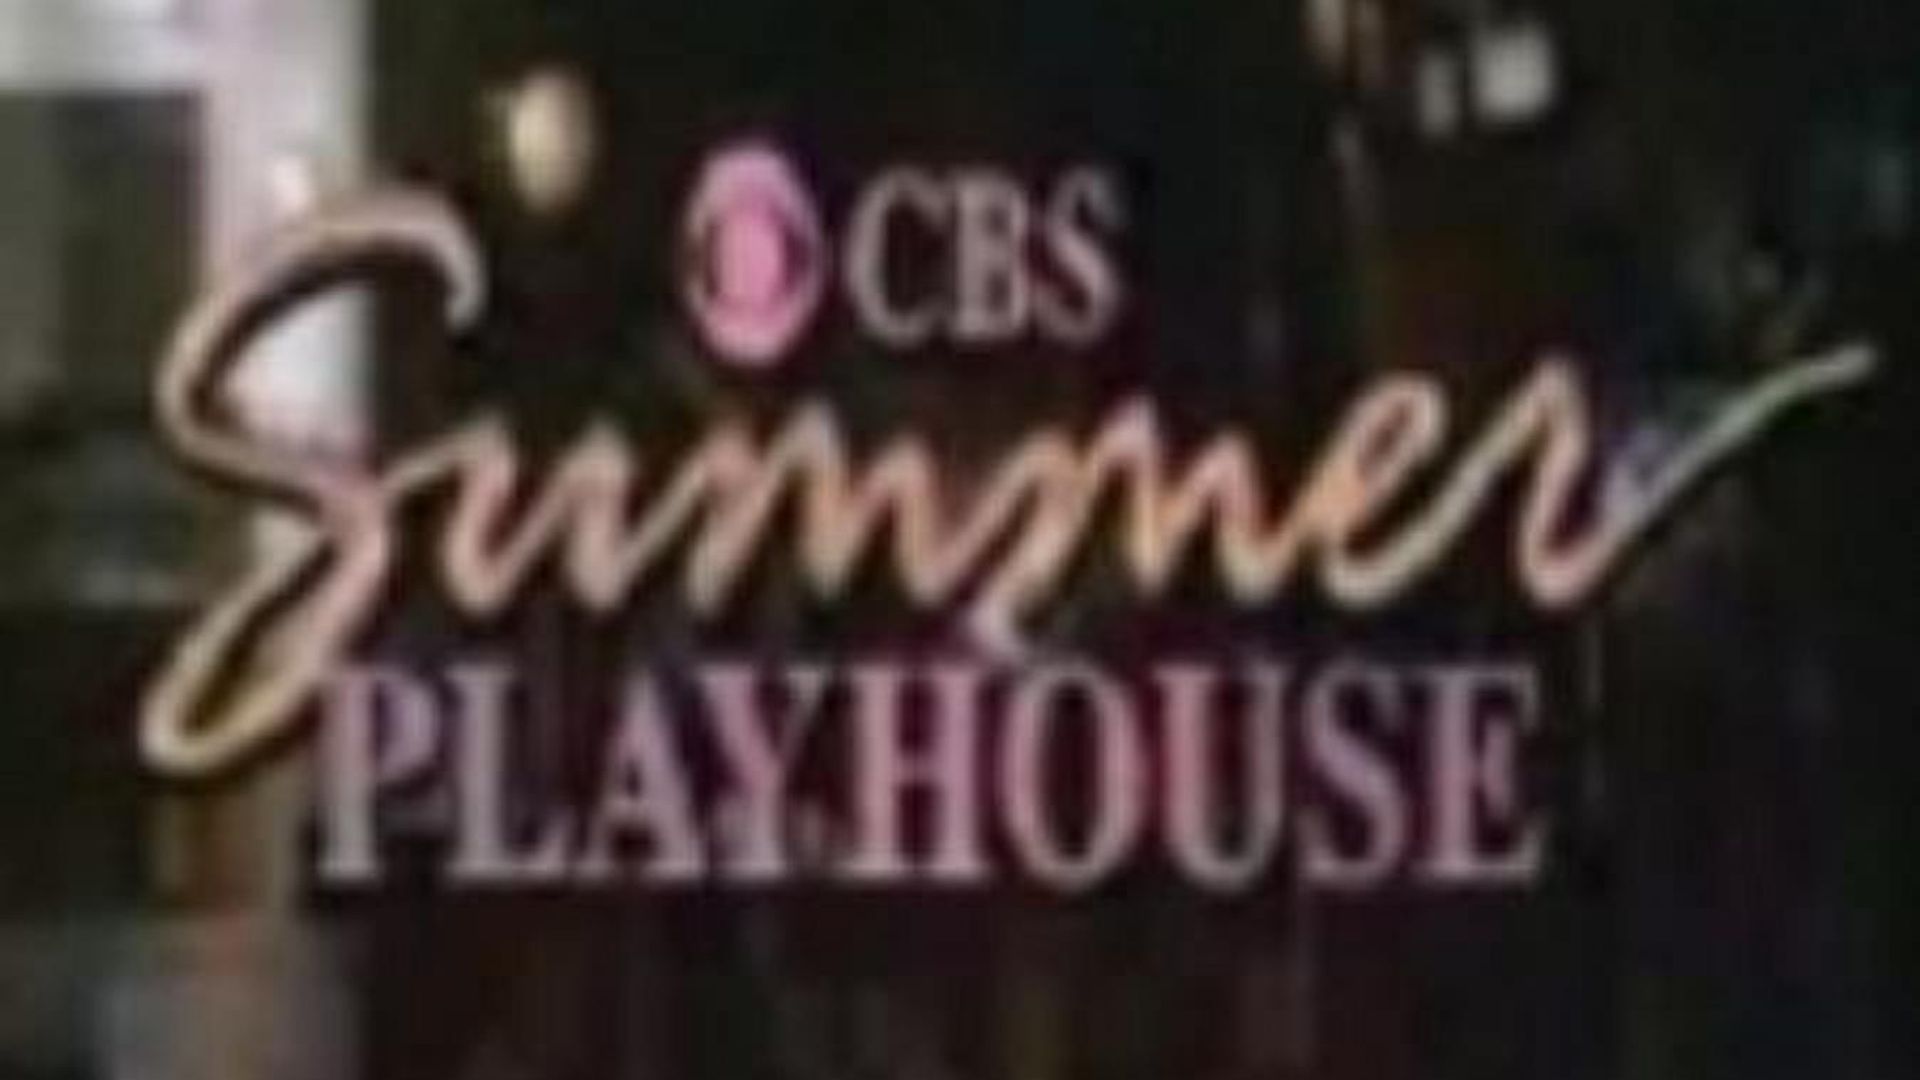 CBS Summer Playhouse background